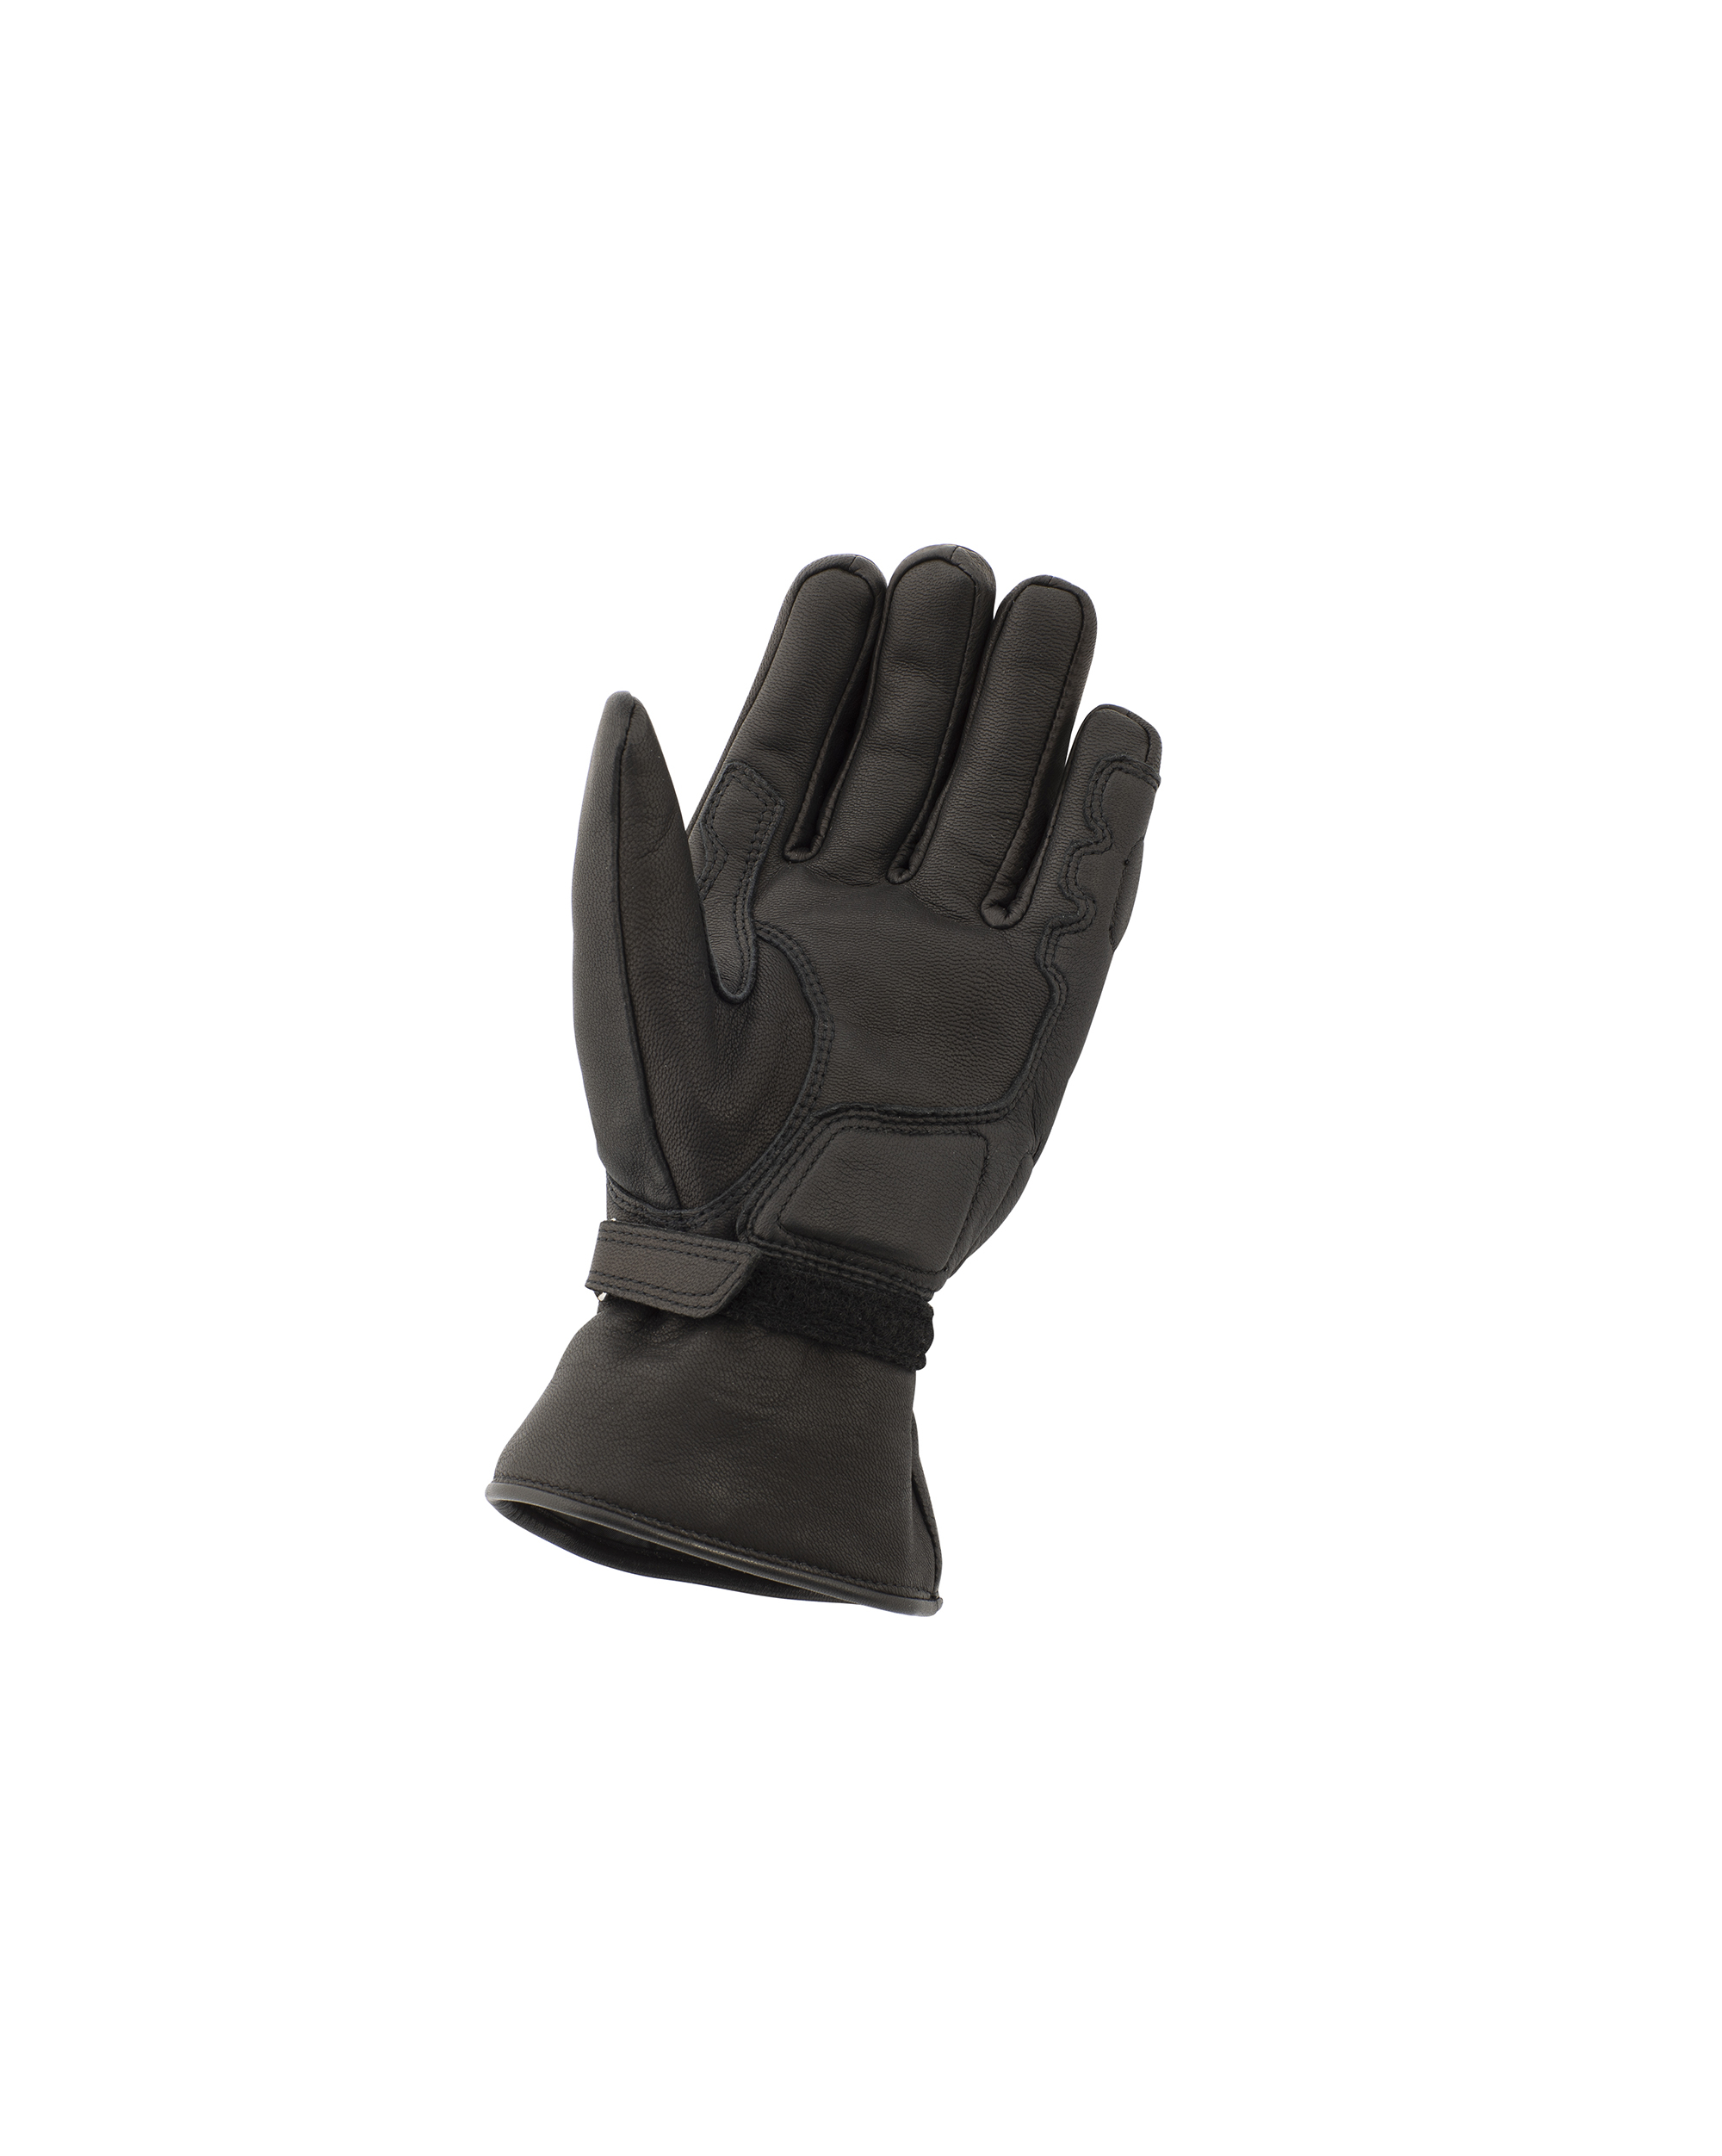 Bang om te sterven Zinloos Verbazing Vespa 3/4 Winterhandschoenen Leder zwart | Handschoenen | Kleding | Piaggio- Vespa Online Shop by RWN